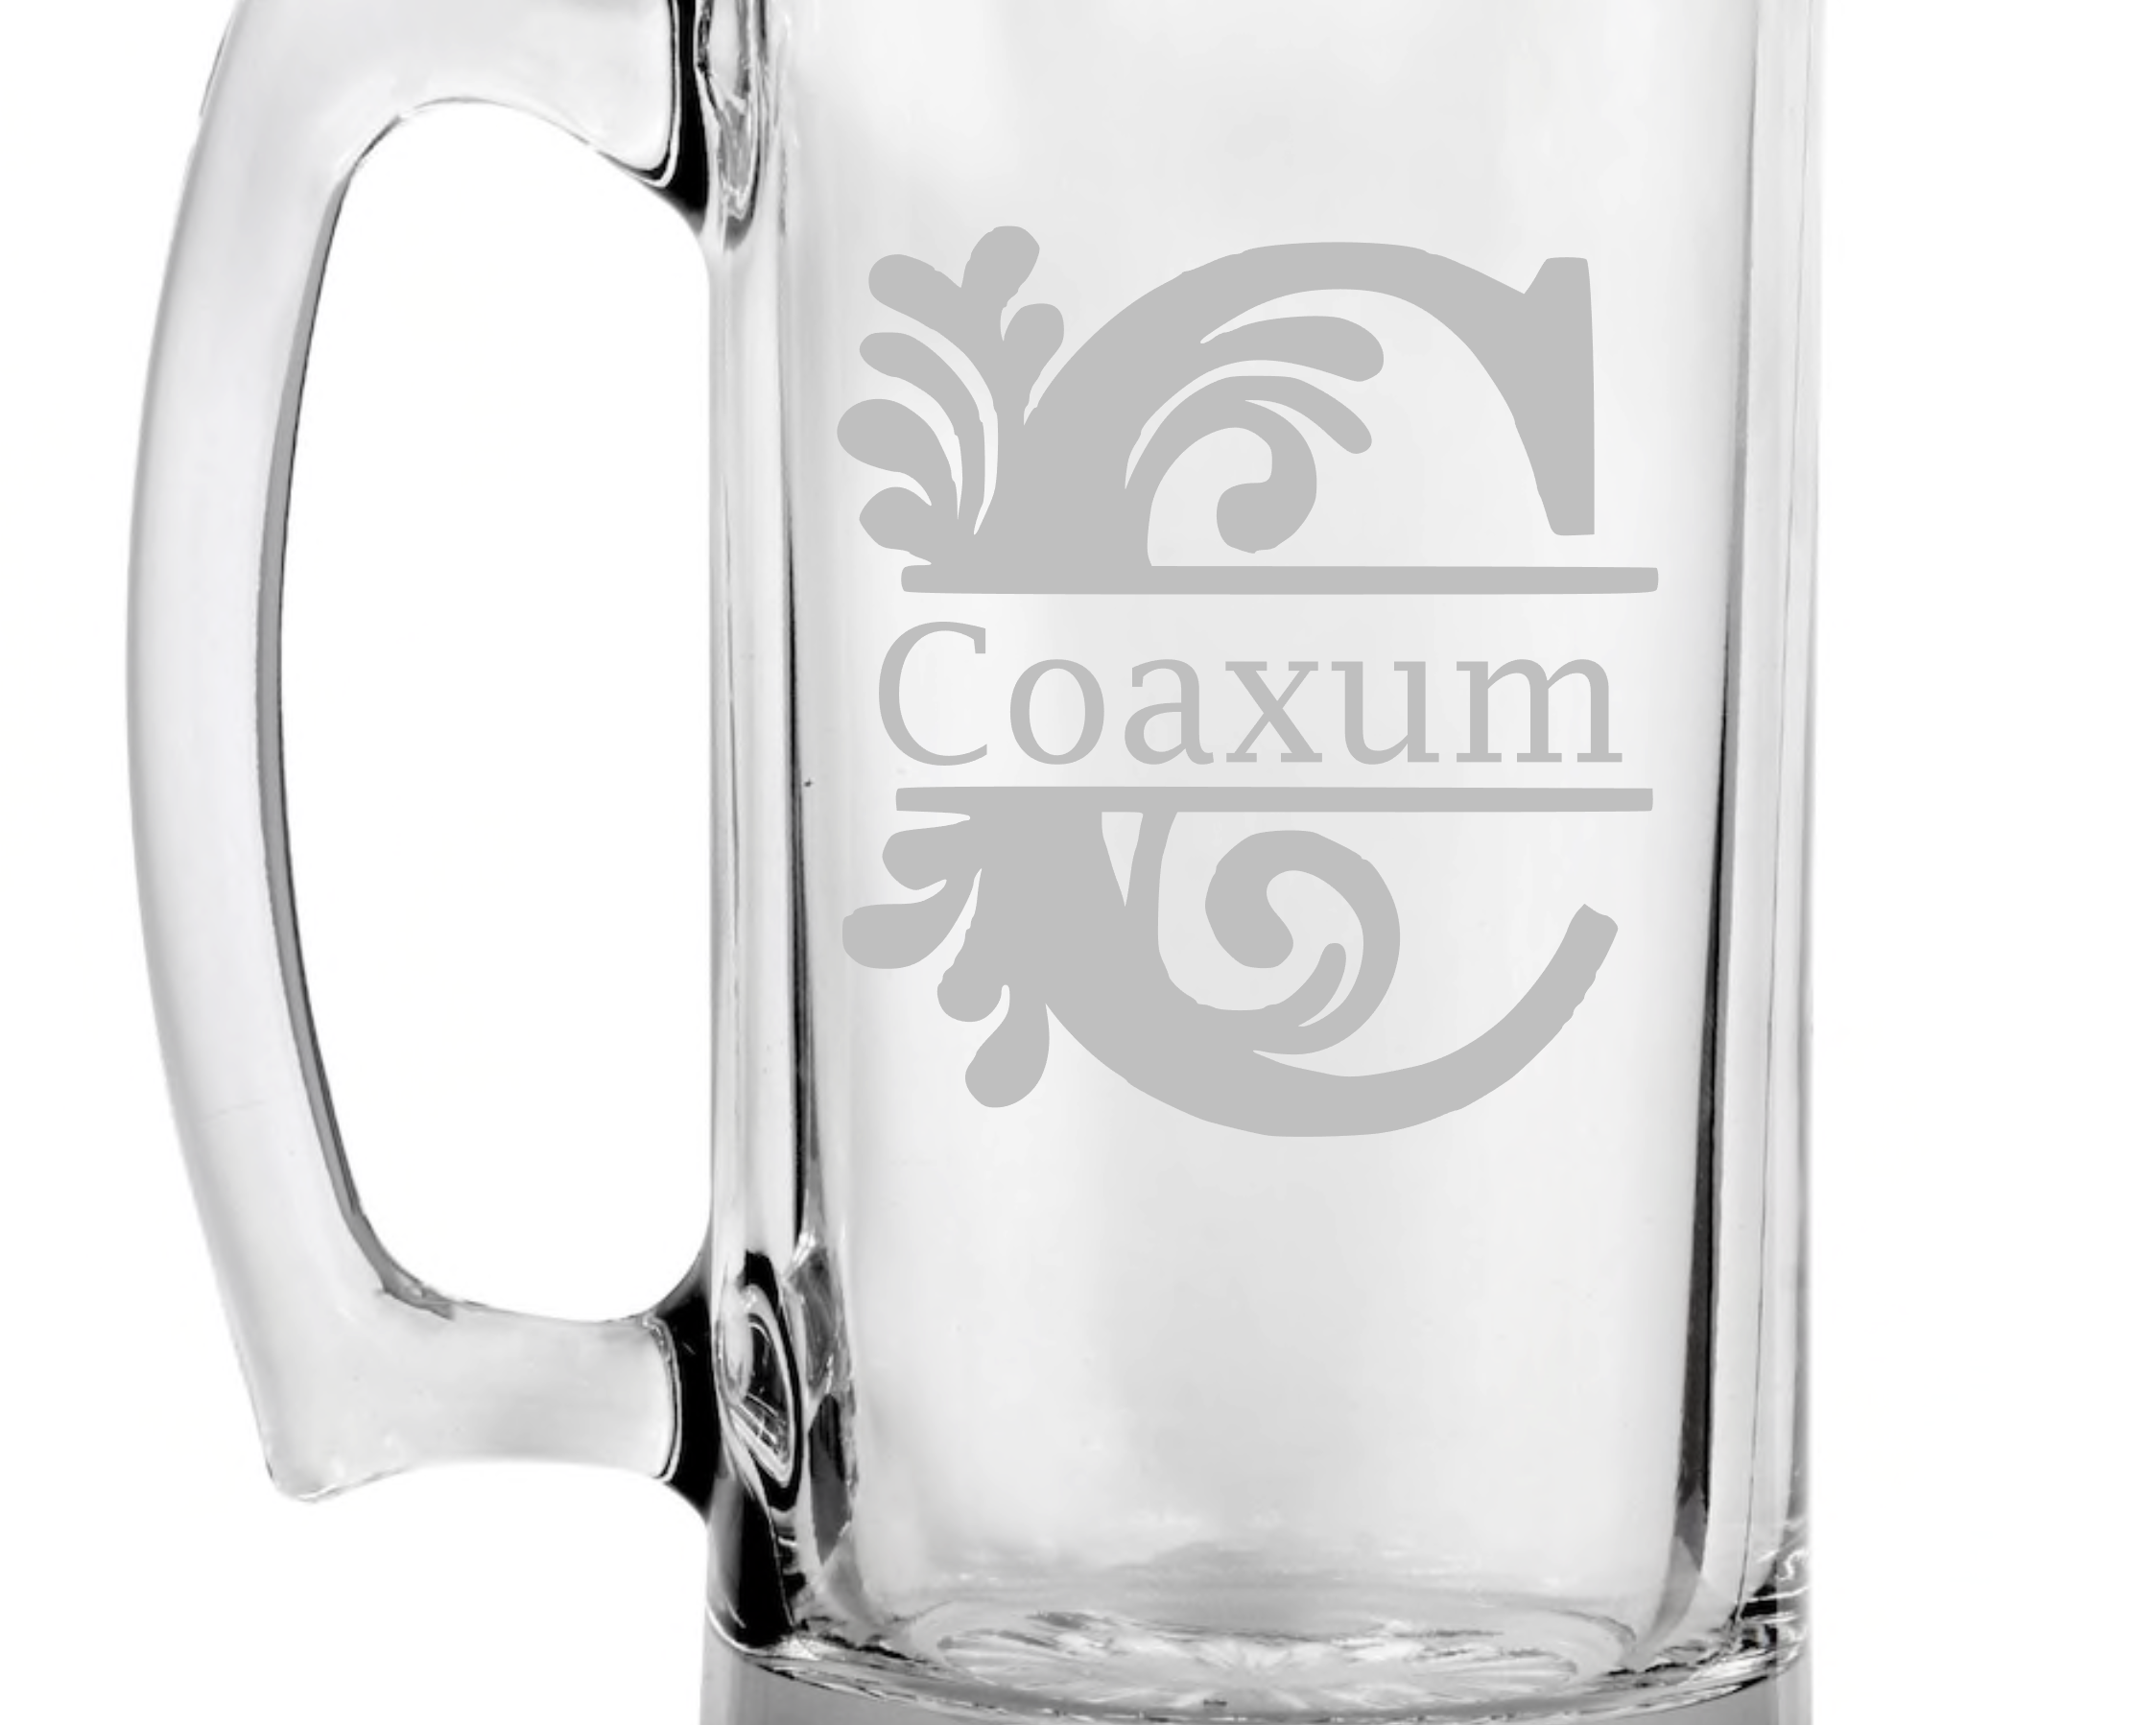 Set of 4 / Wedding Engraved Personalized Beer Mugs for Groomsman / Best Man  / Groom - 23oz Glass Beer Mug / Valentine's Day Gift